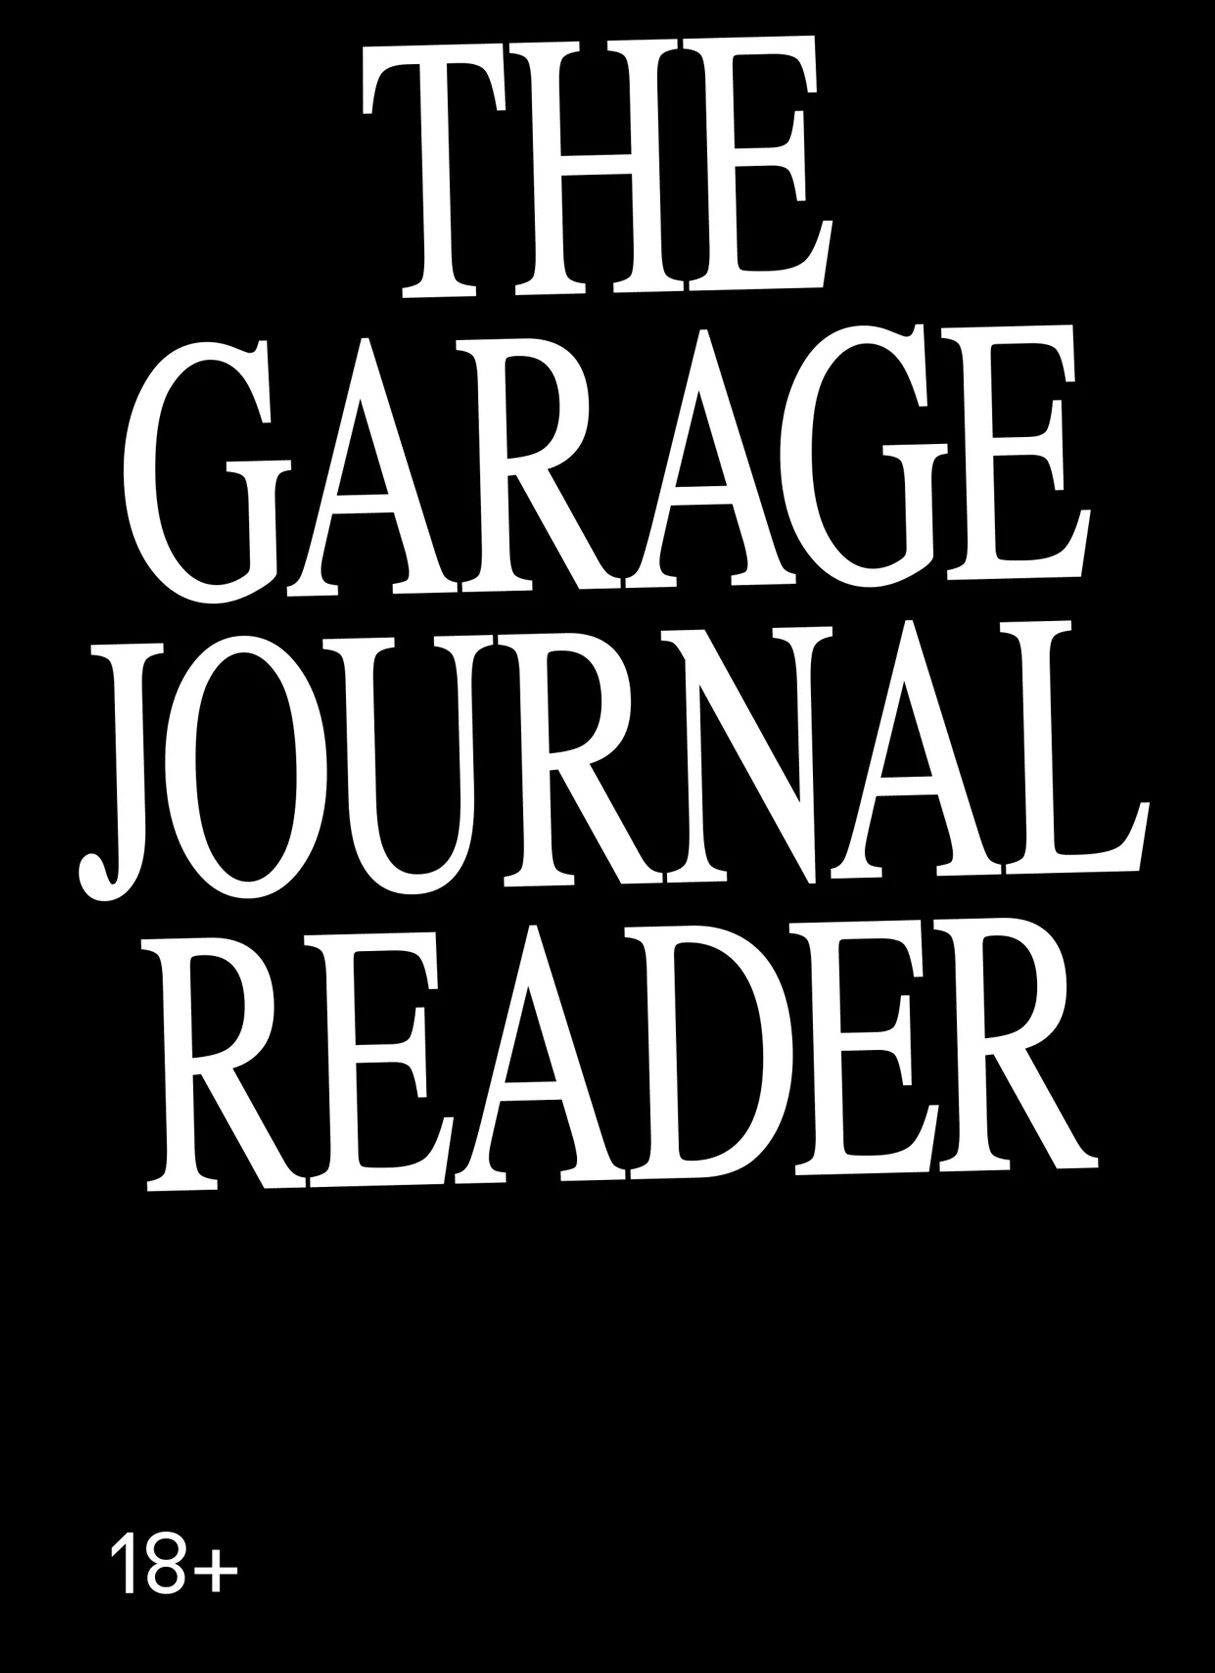 The Garage journal reader биеннале христоцентричного искусства